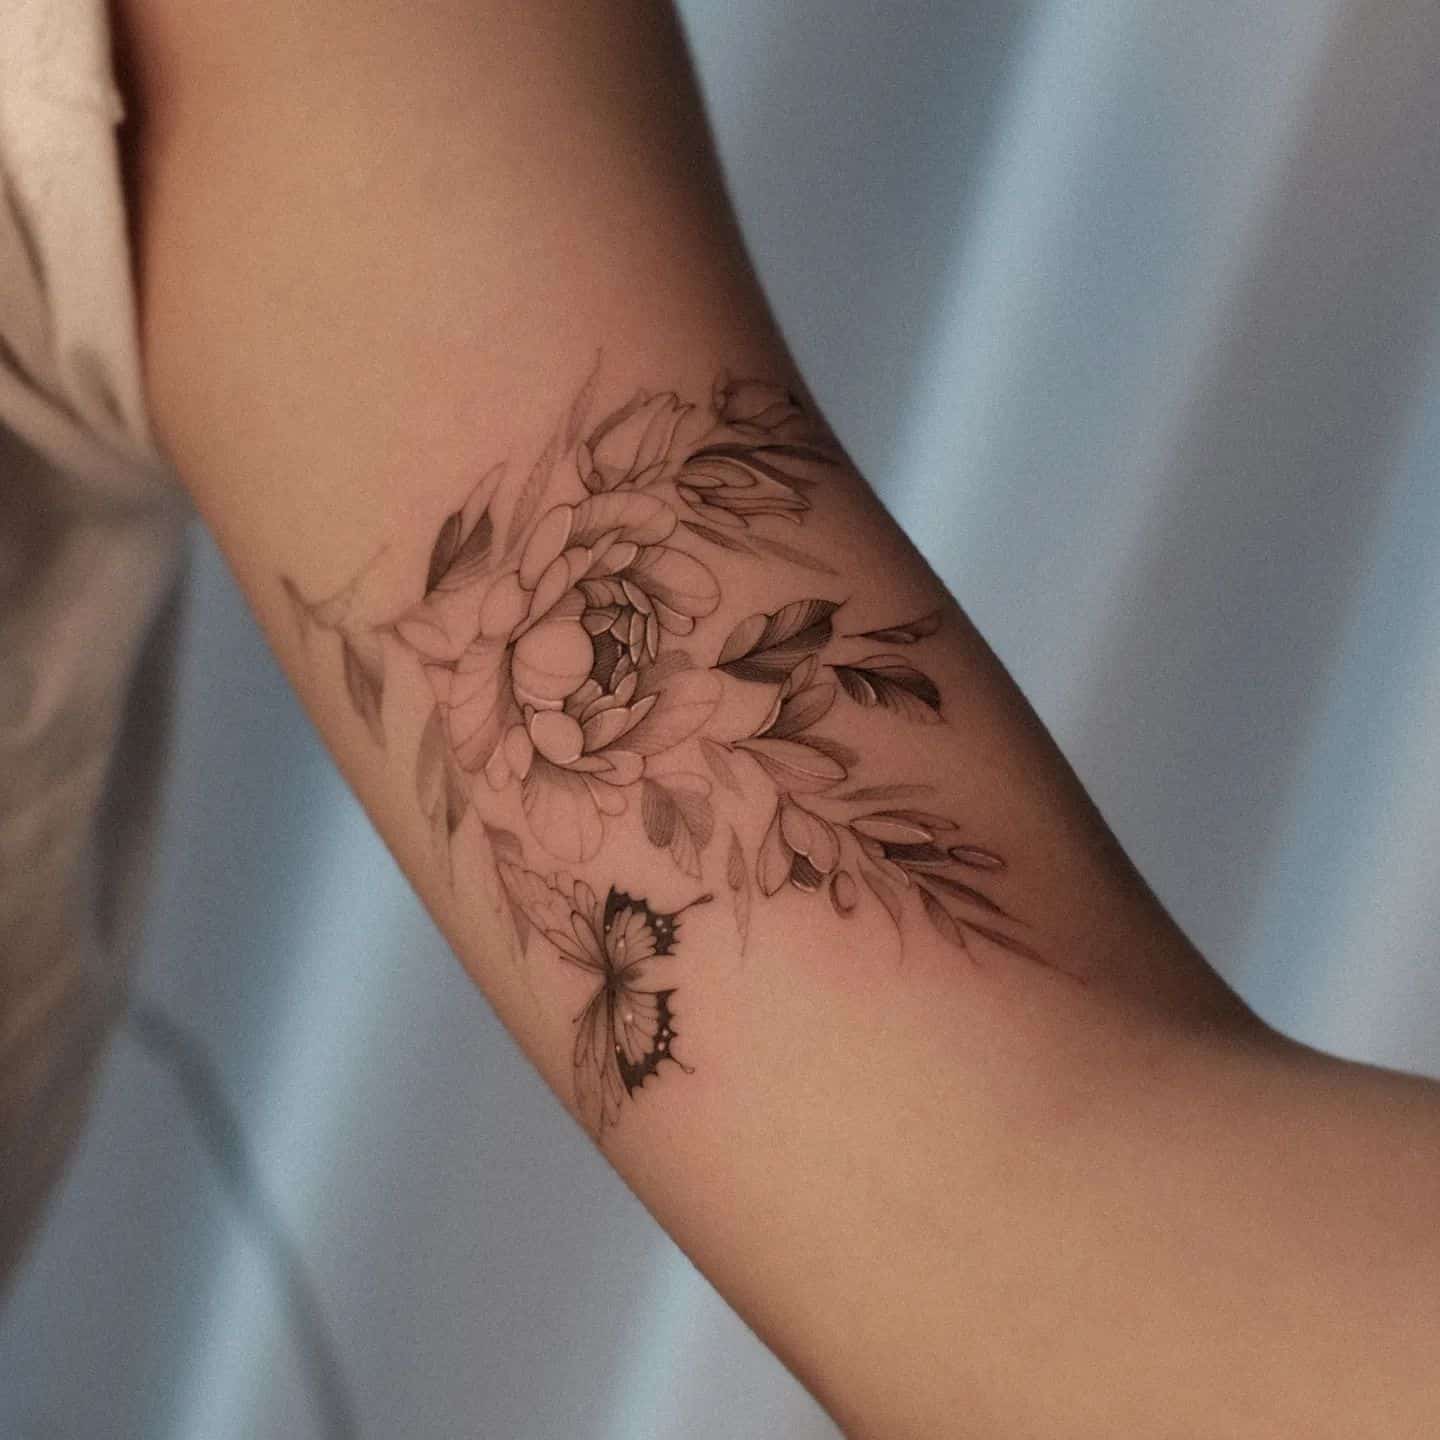 Black and grey rose tattoo by saku.tatt